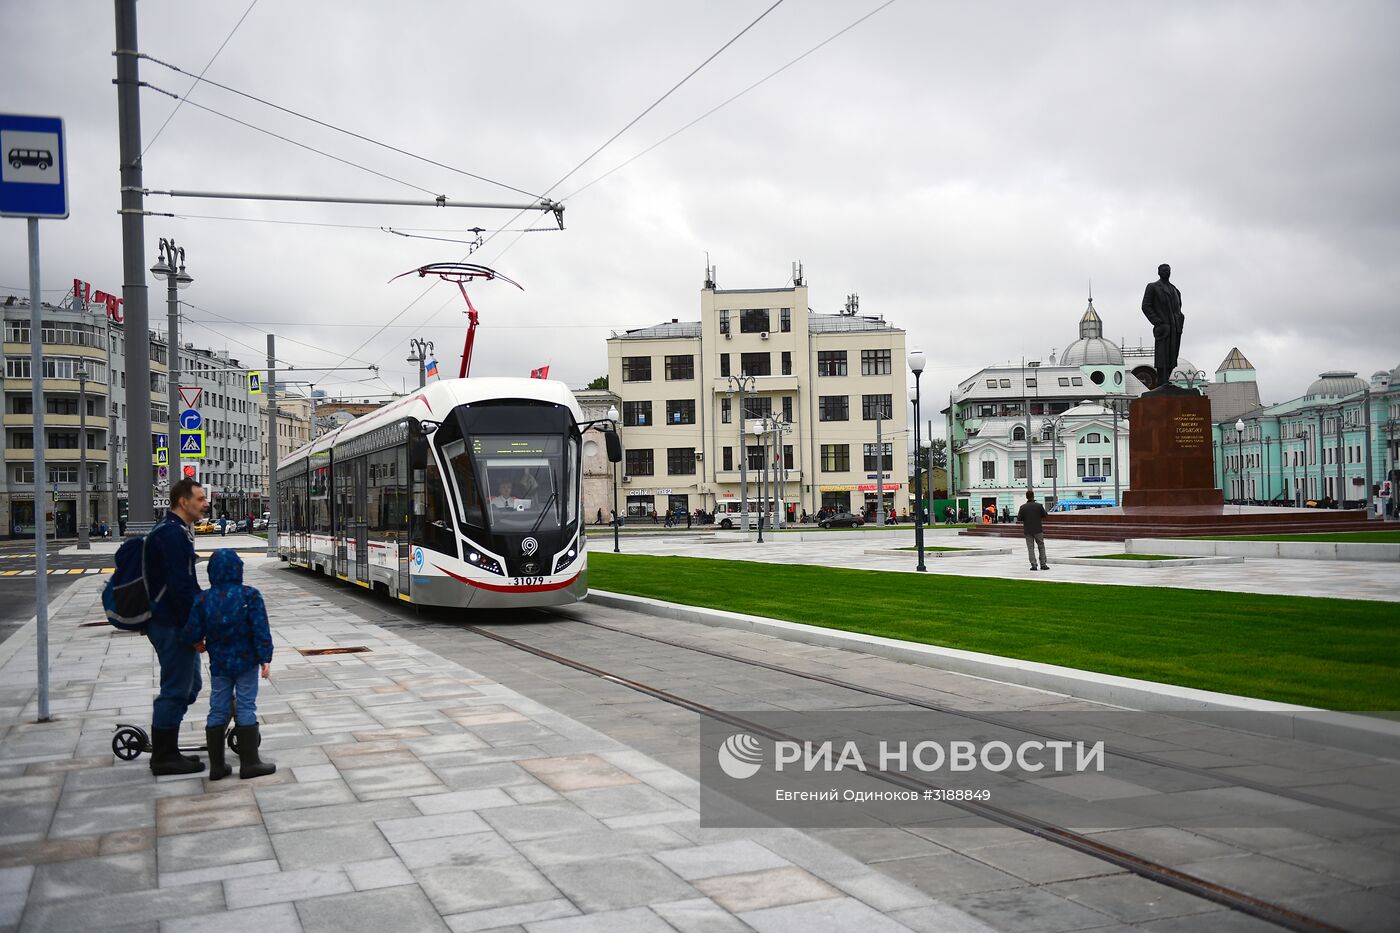 Открытие движения трамваев на площади Тверская Застава